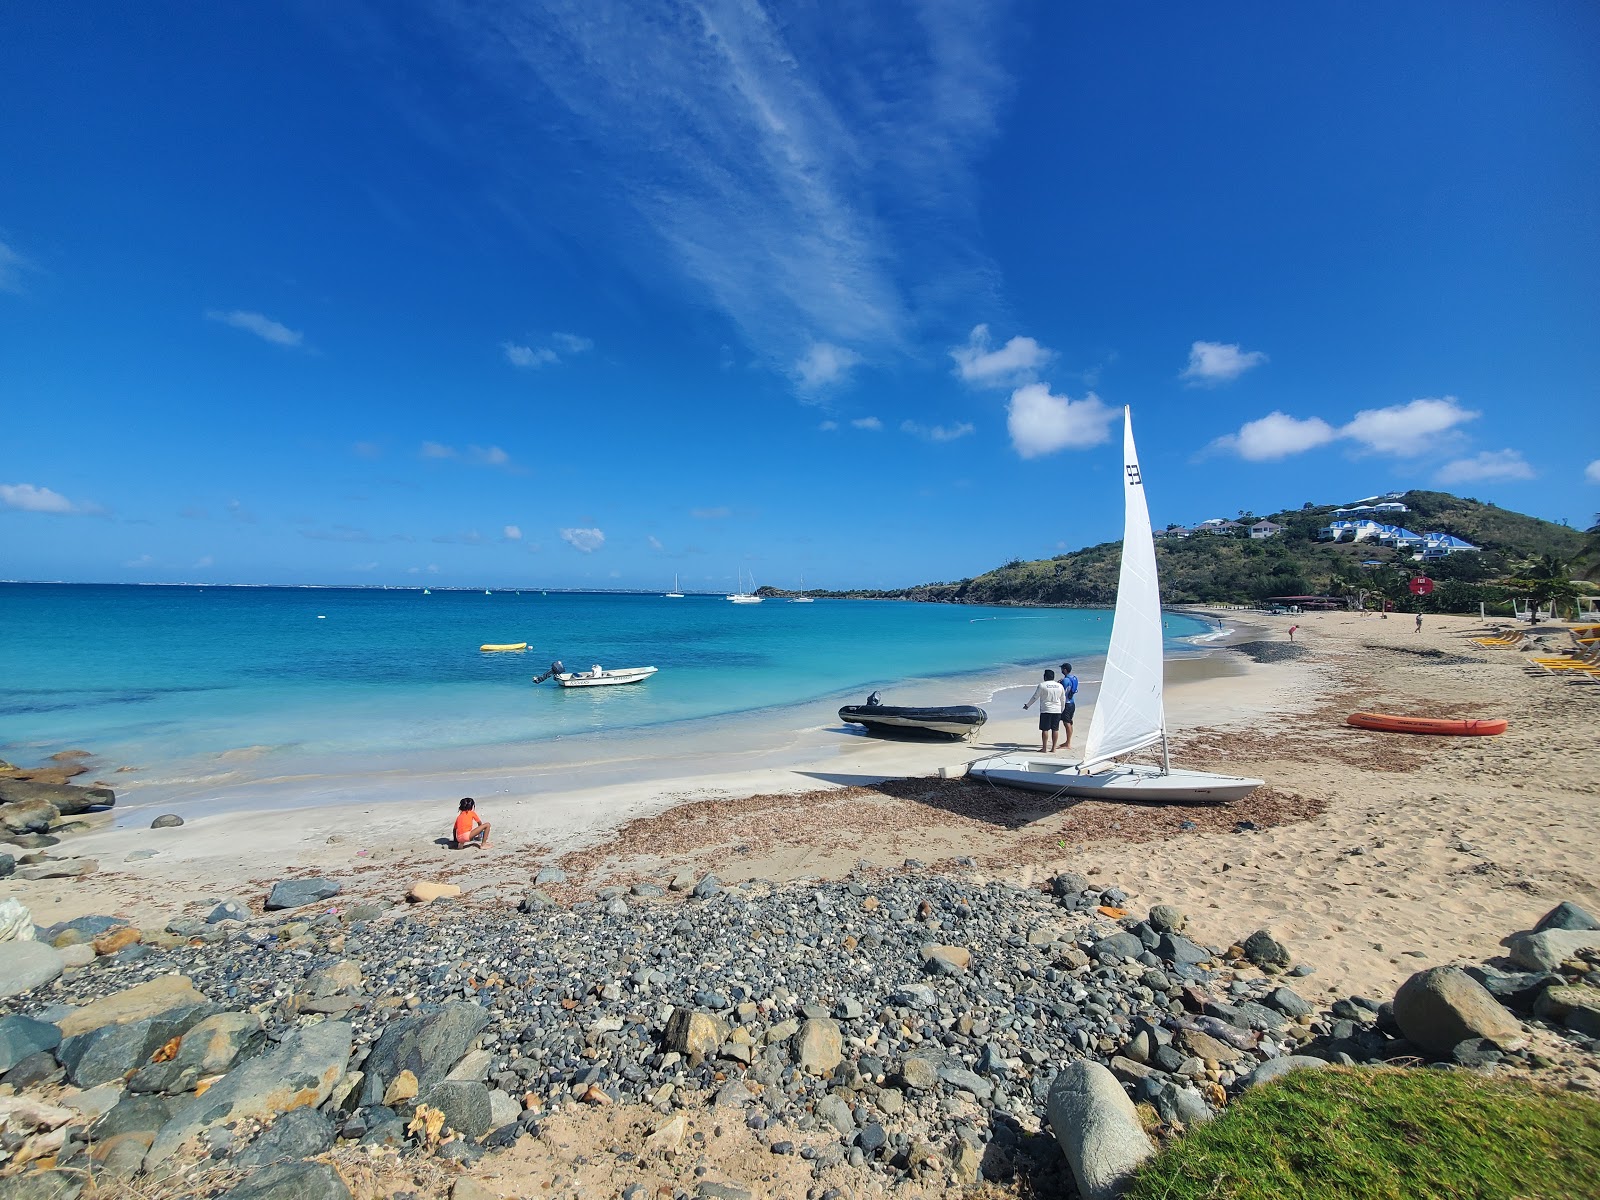 Photo of Friar’s Bay beach beach resort area